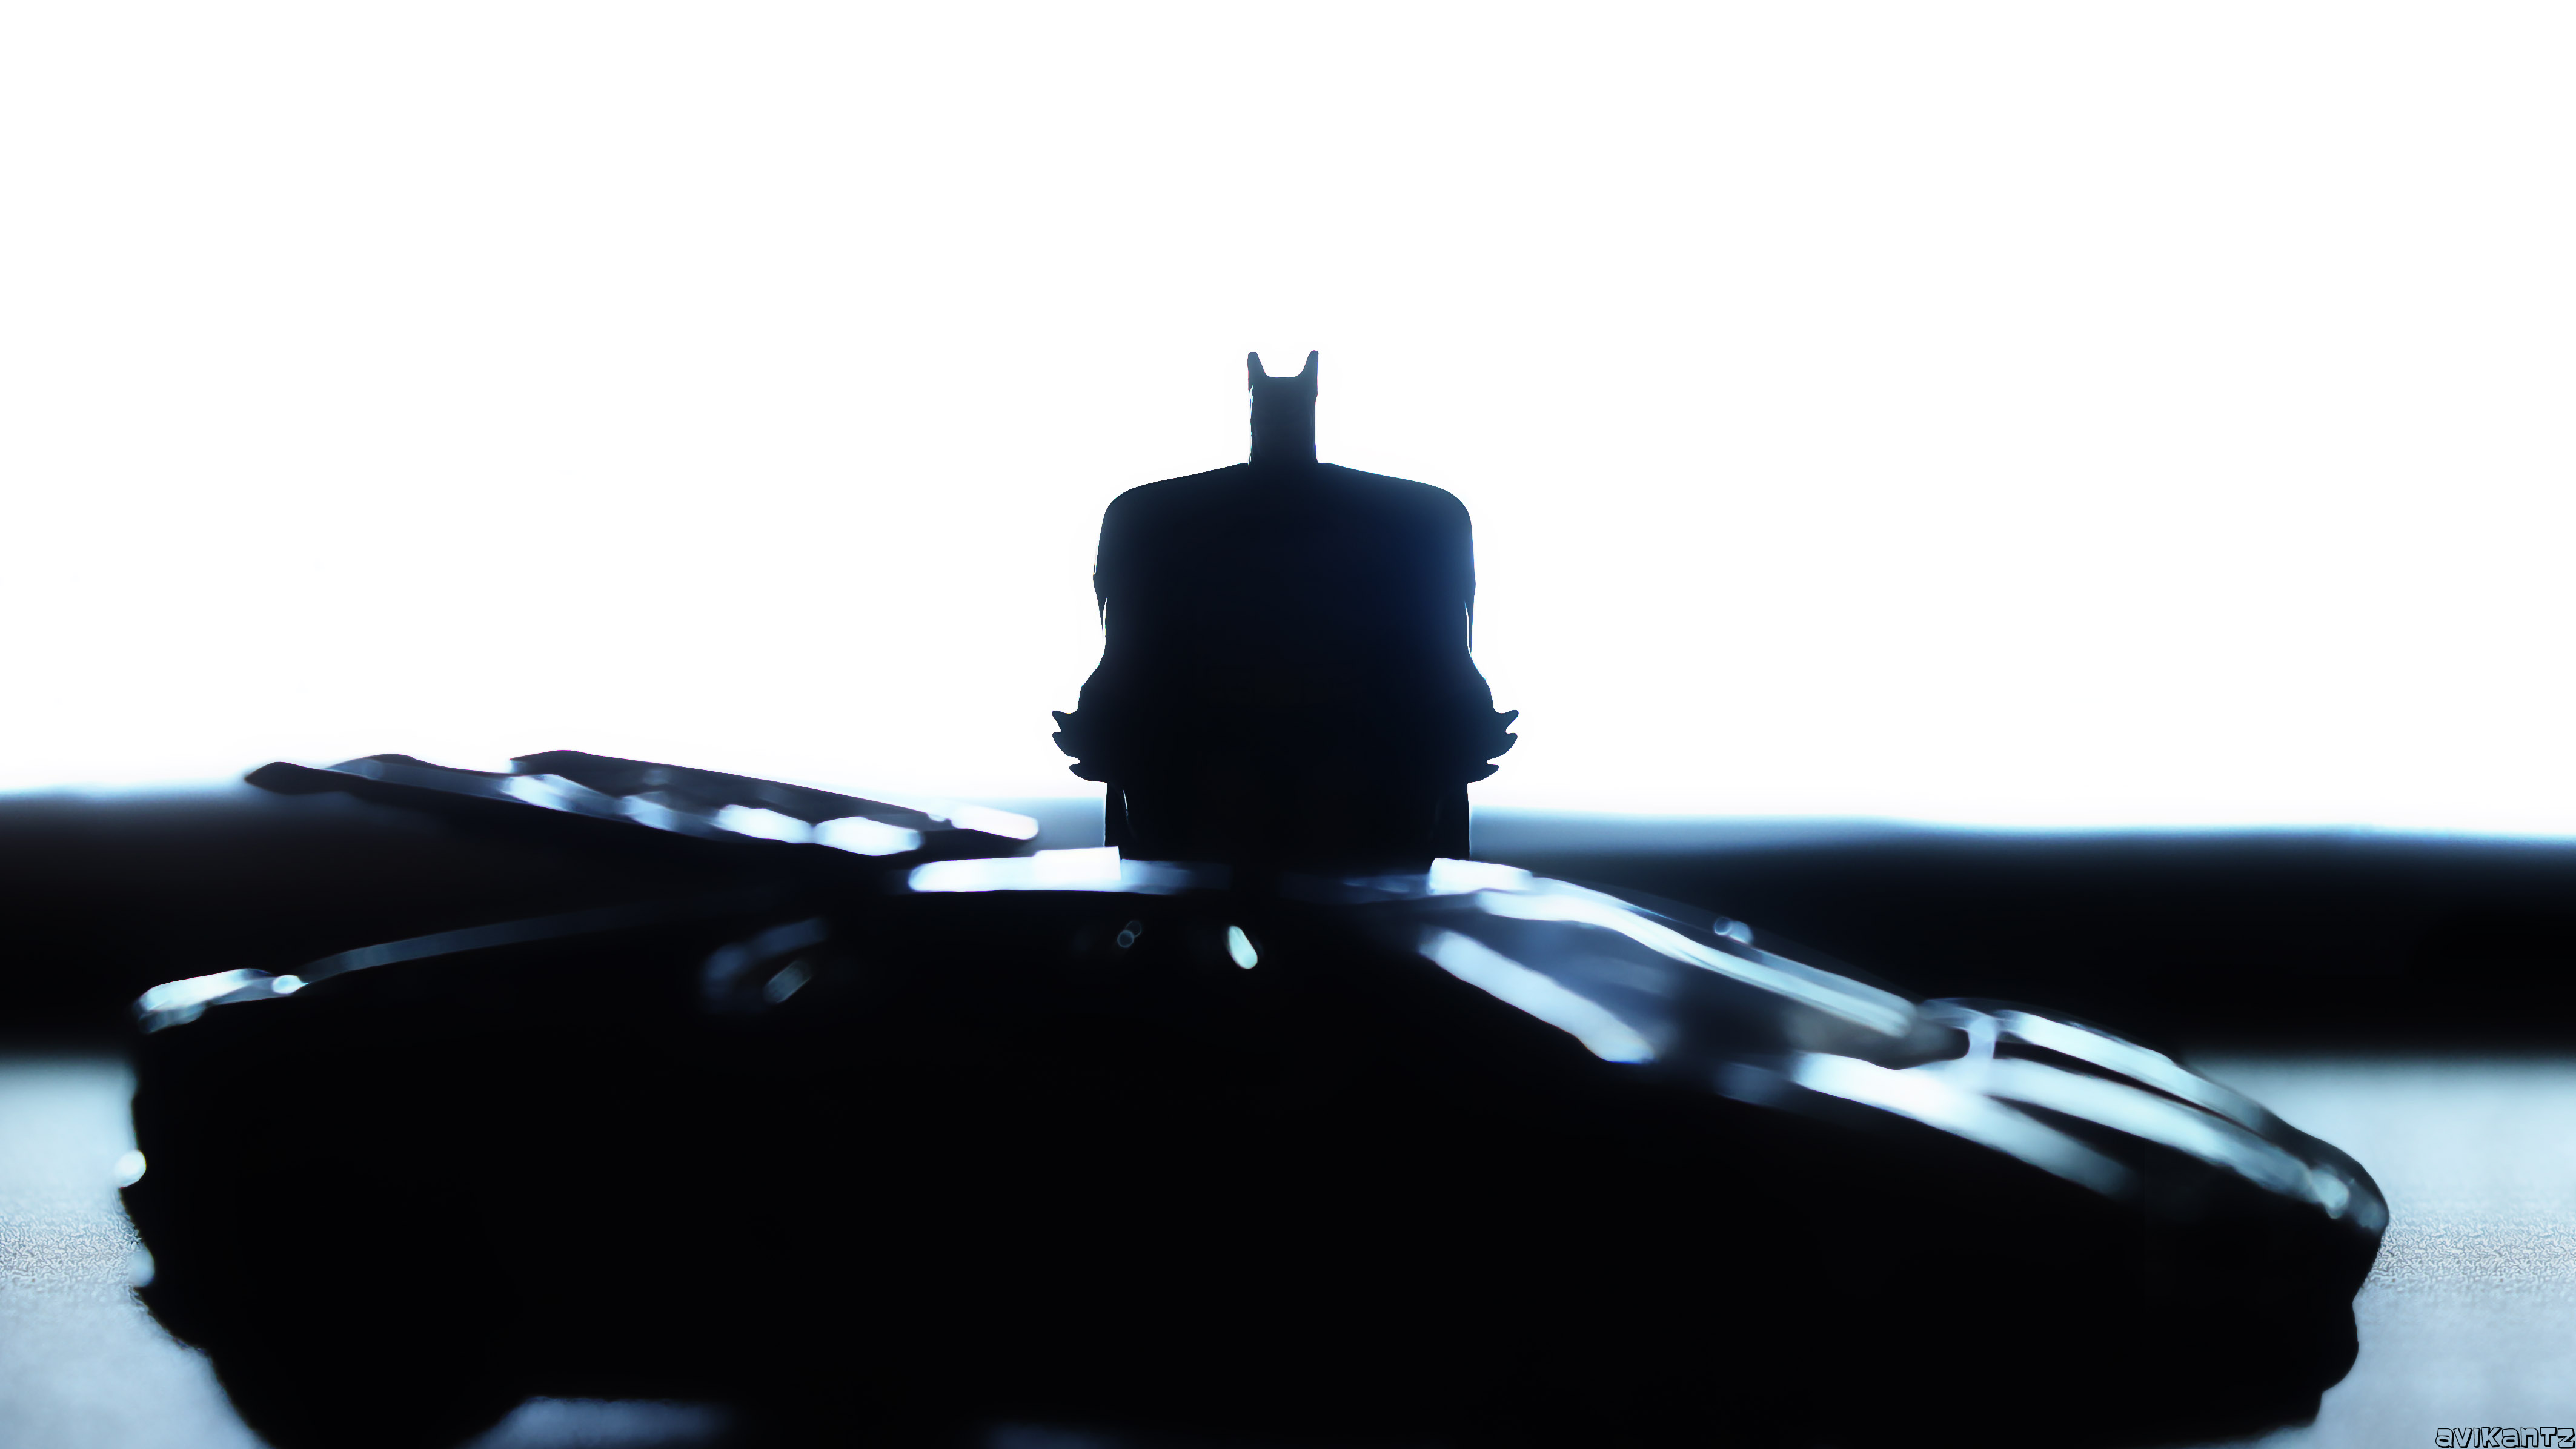 Batman Batmobile Silhouette The Dark Knight 4252x2392